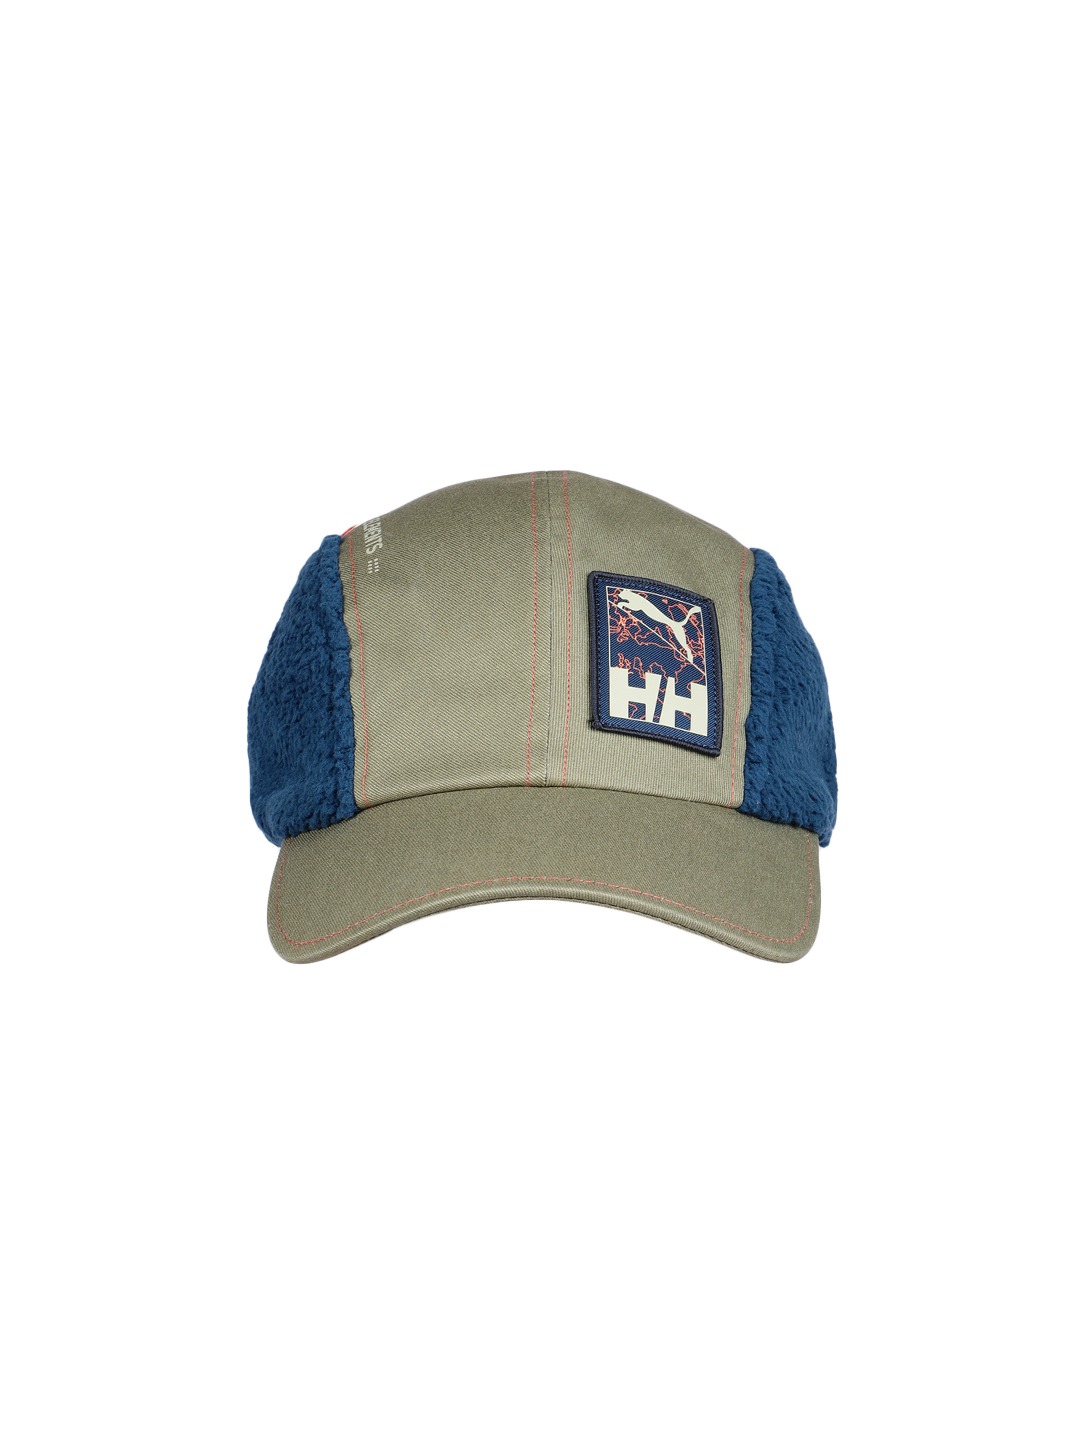 Accessories Caps | Puma Unisex Green & Blue Printed Baseball Cap - BF06096